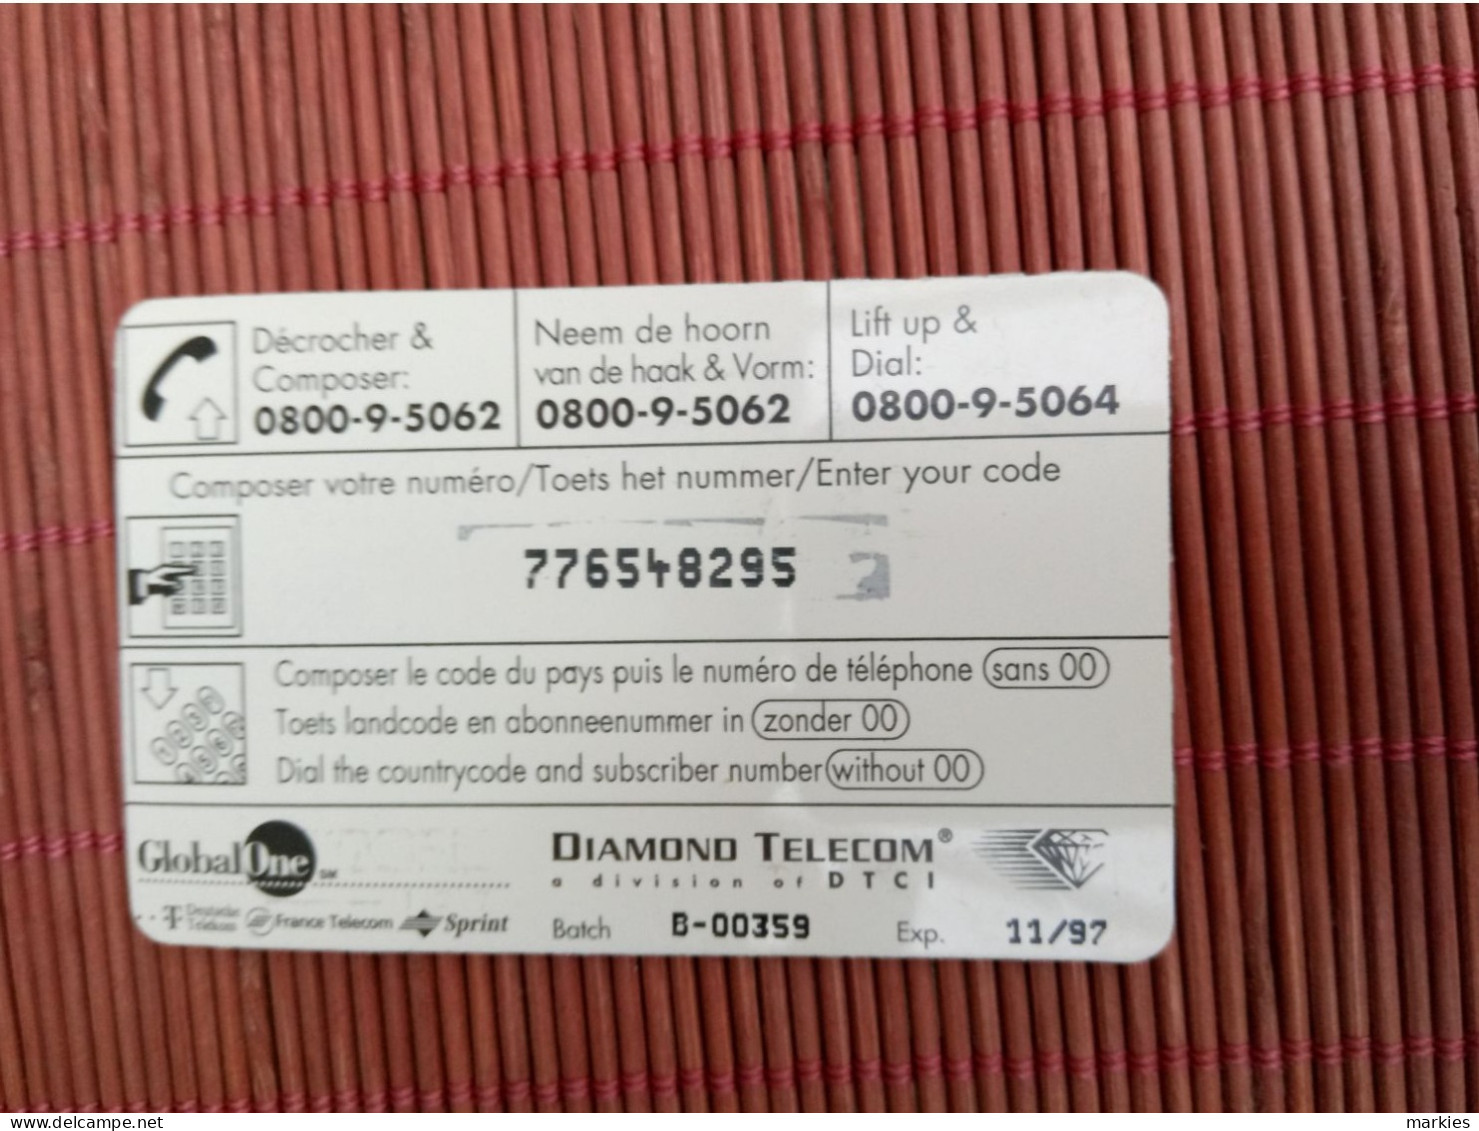 Diamond Telecom With Golbal One Logo On Bakside 2 Phtos  Used Rare ! - [2] Prepaid & Refill Cards